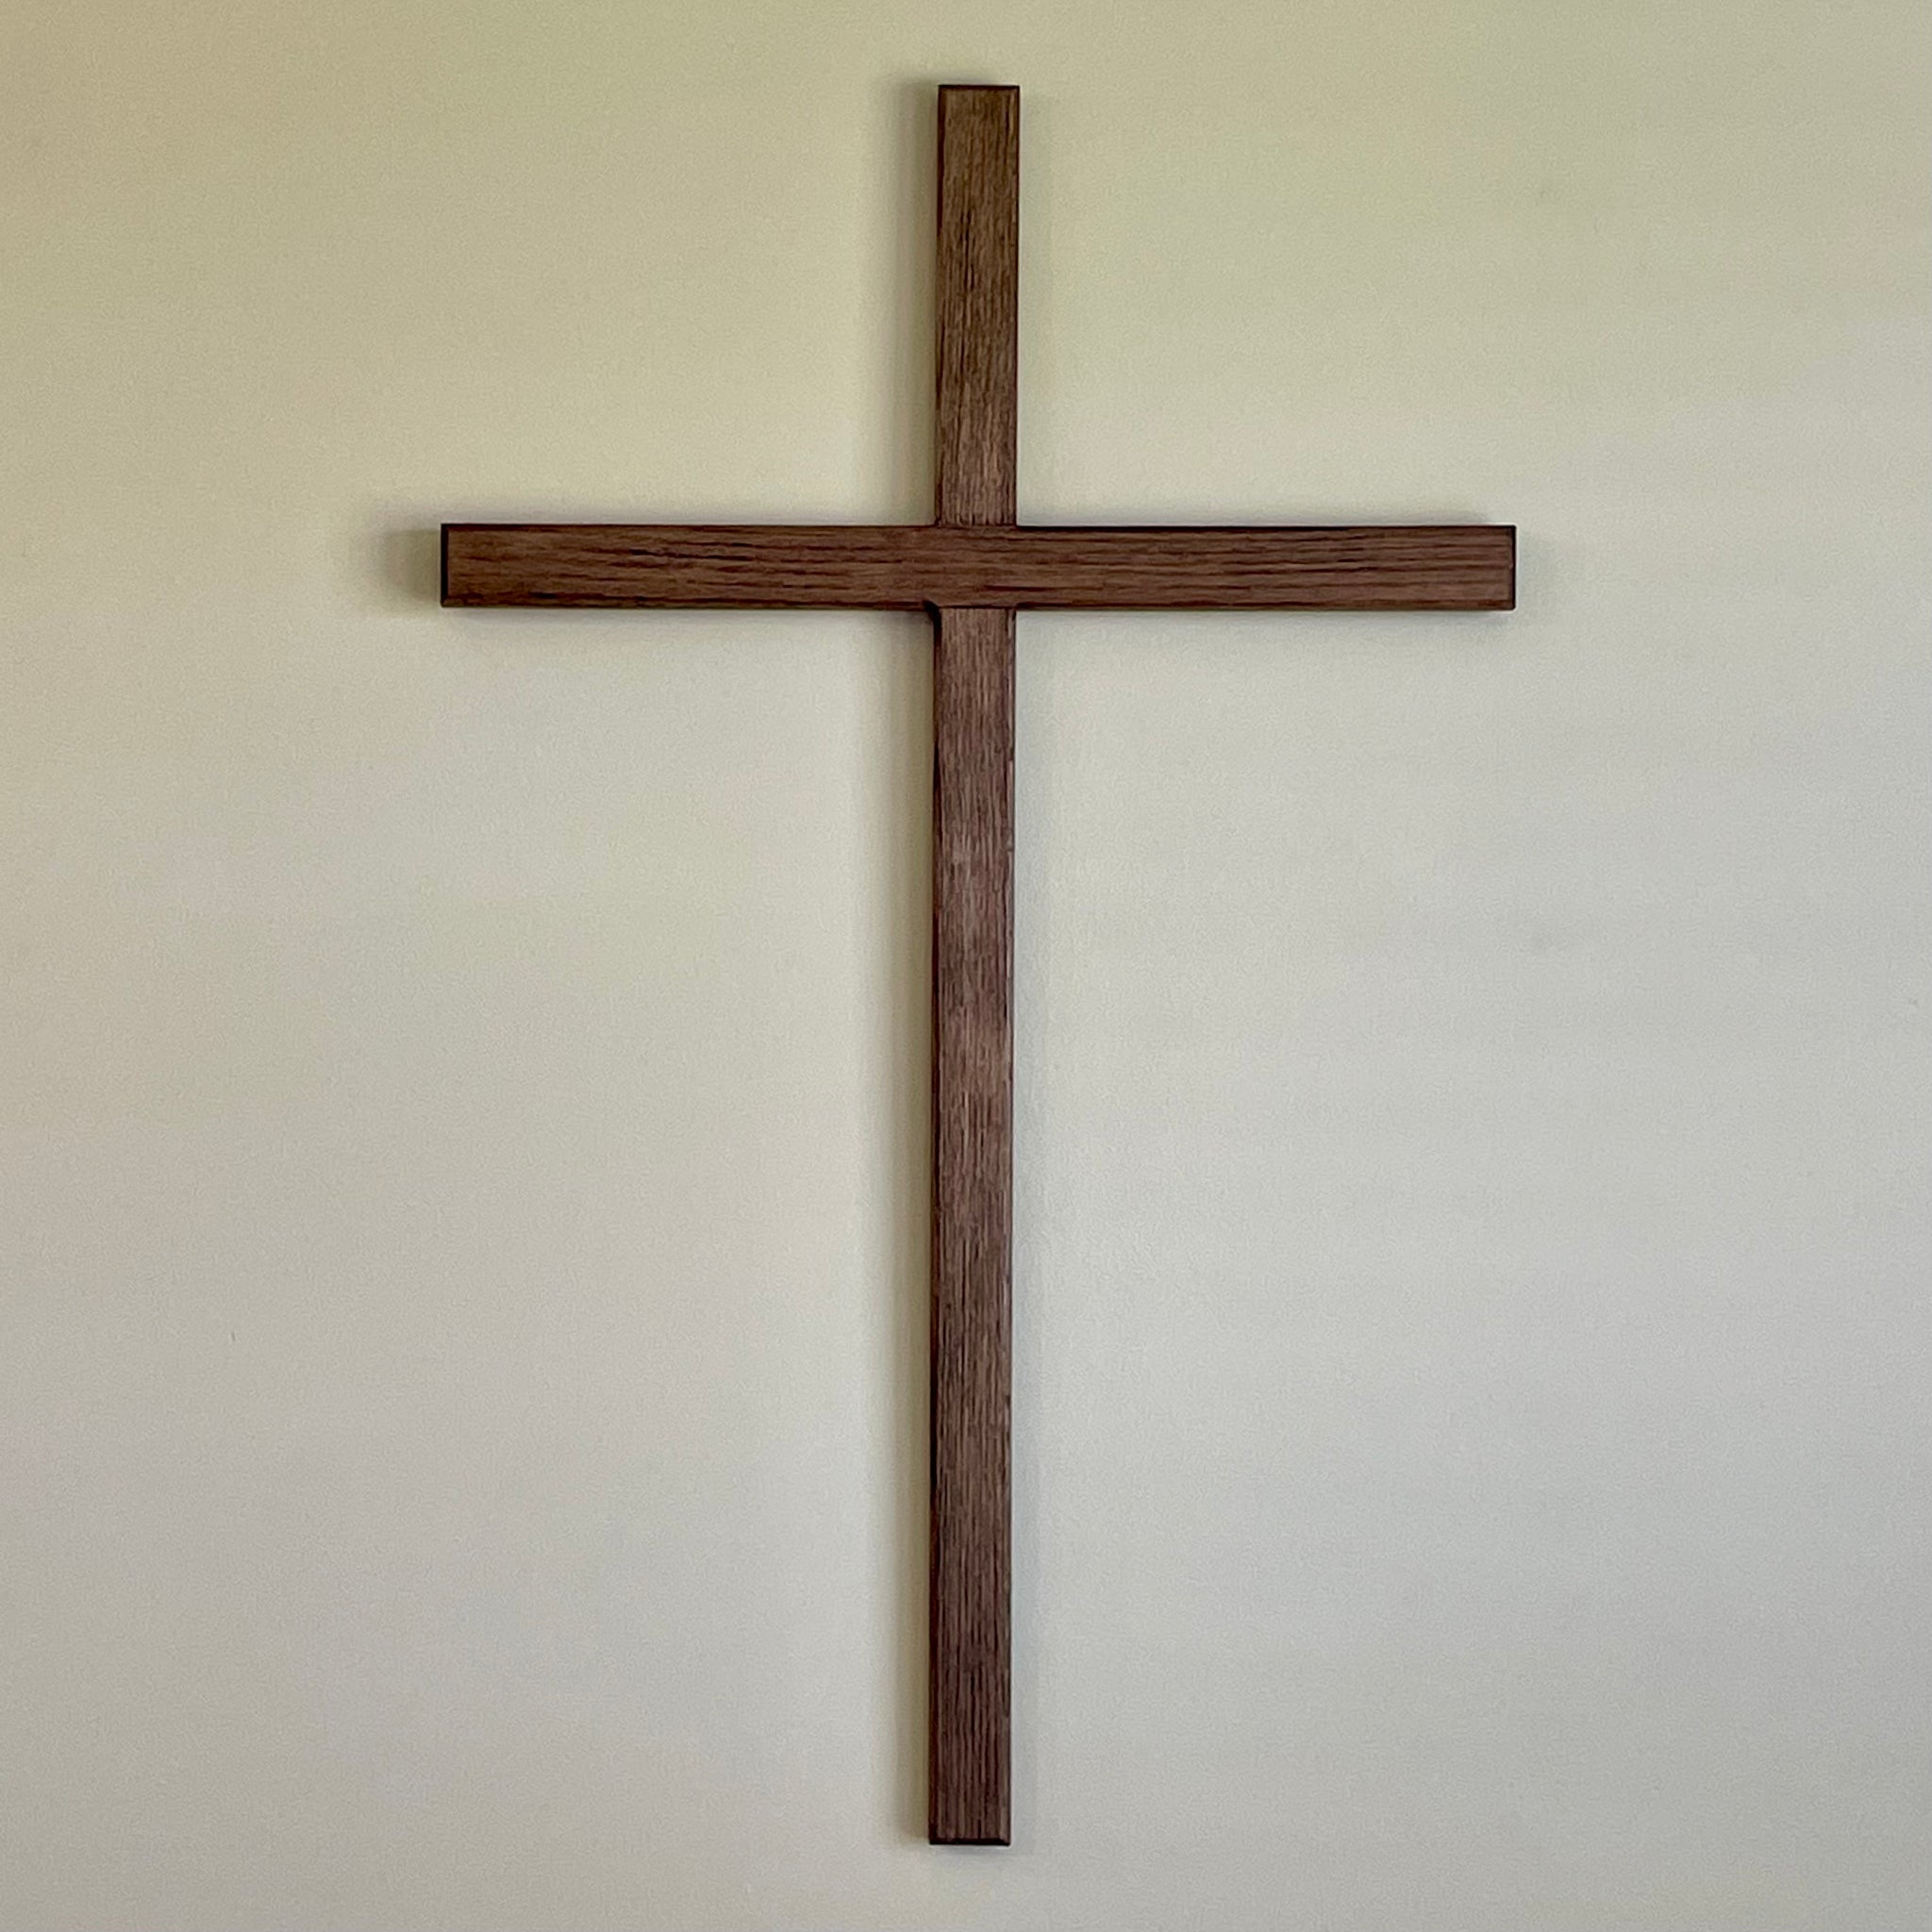 Large Wall Cross, 36, Rustic Wood Cross, Christian Decor, Church